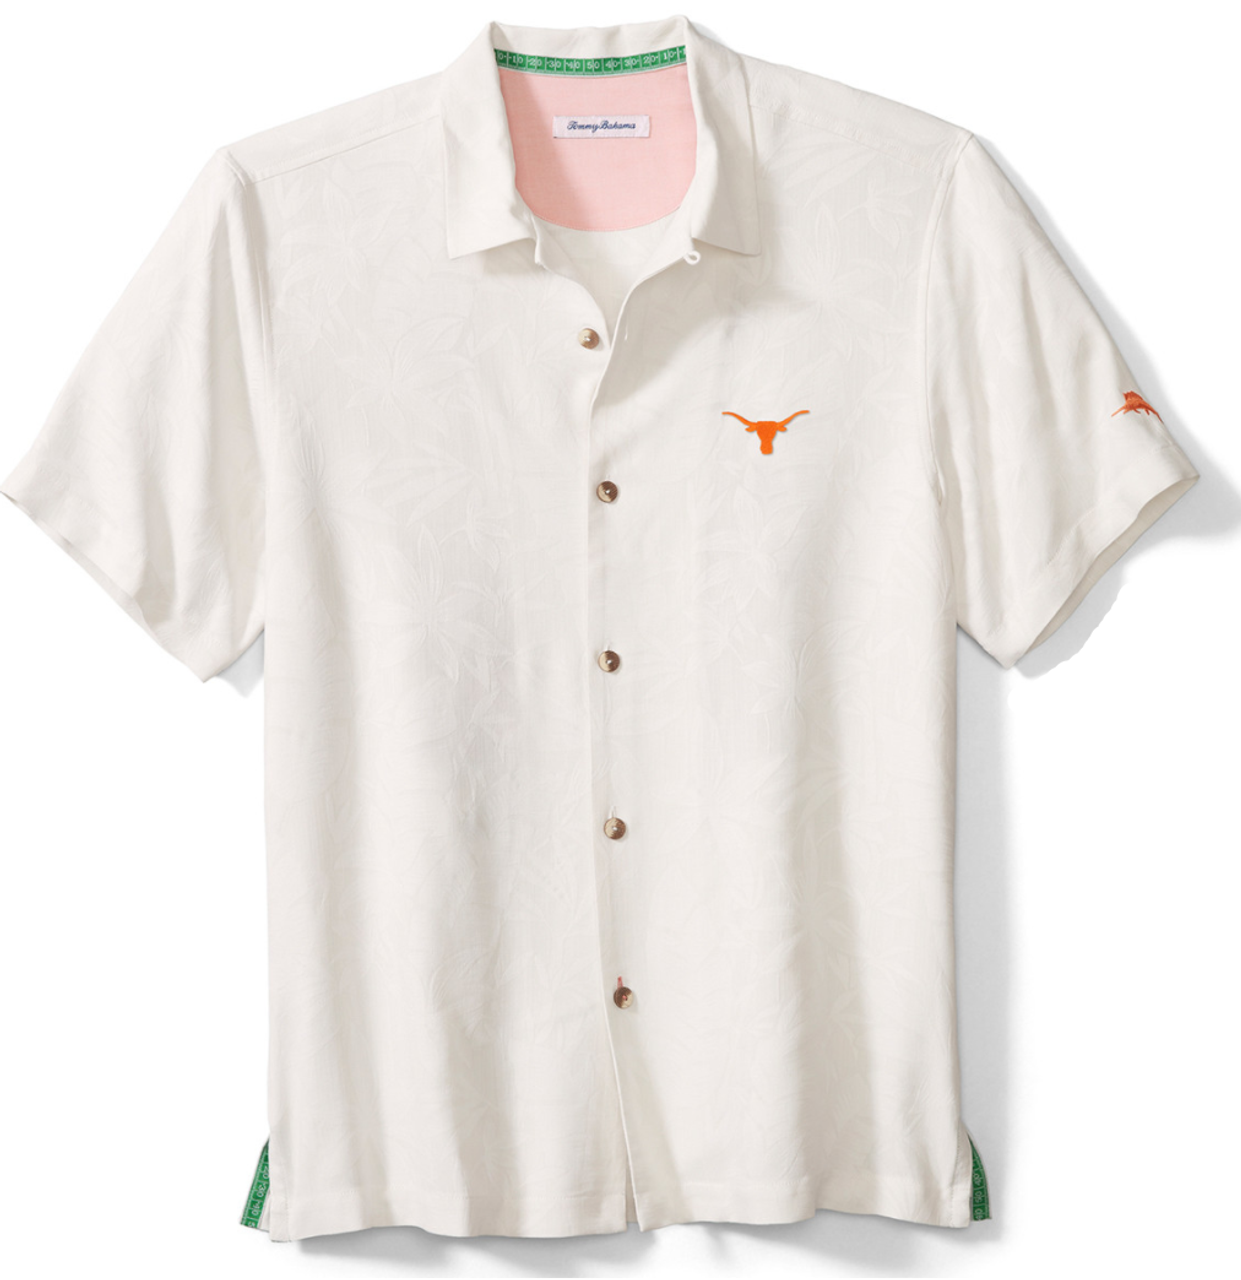 Tommy Bahama, Shirts, New Tommy Bahama Baseball Texas Rangers Mens Shirt